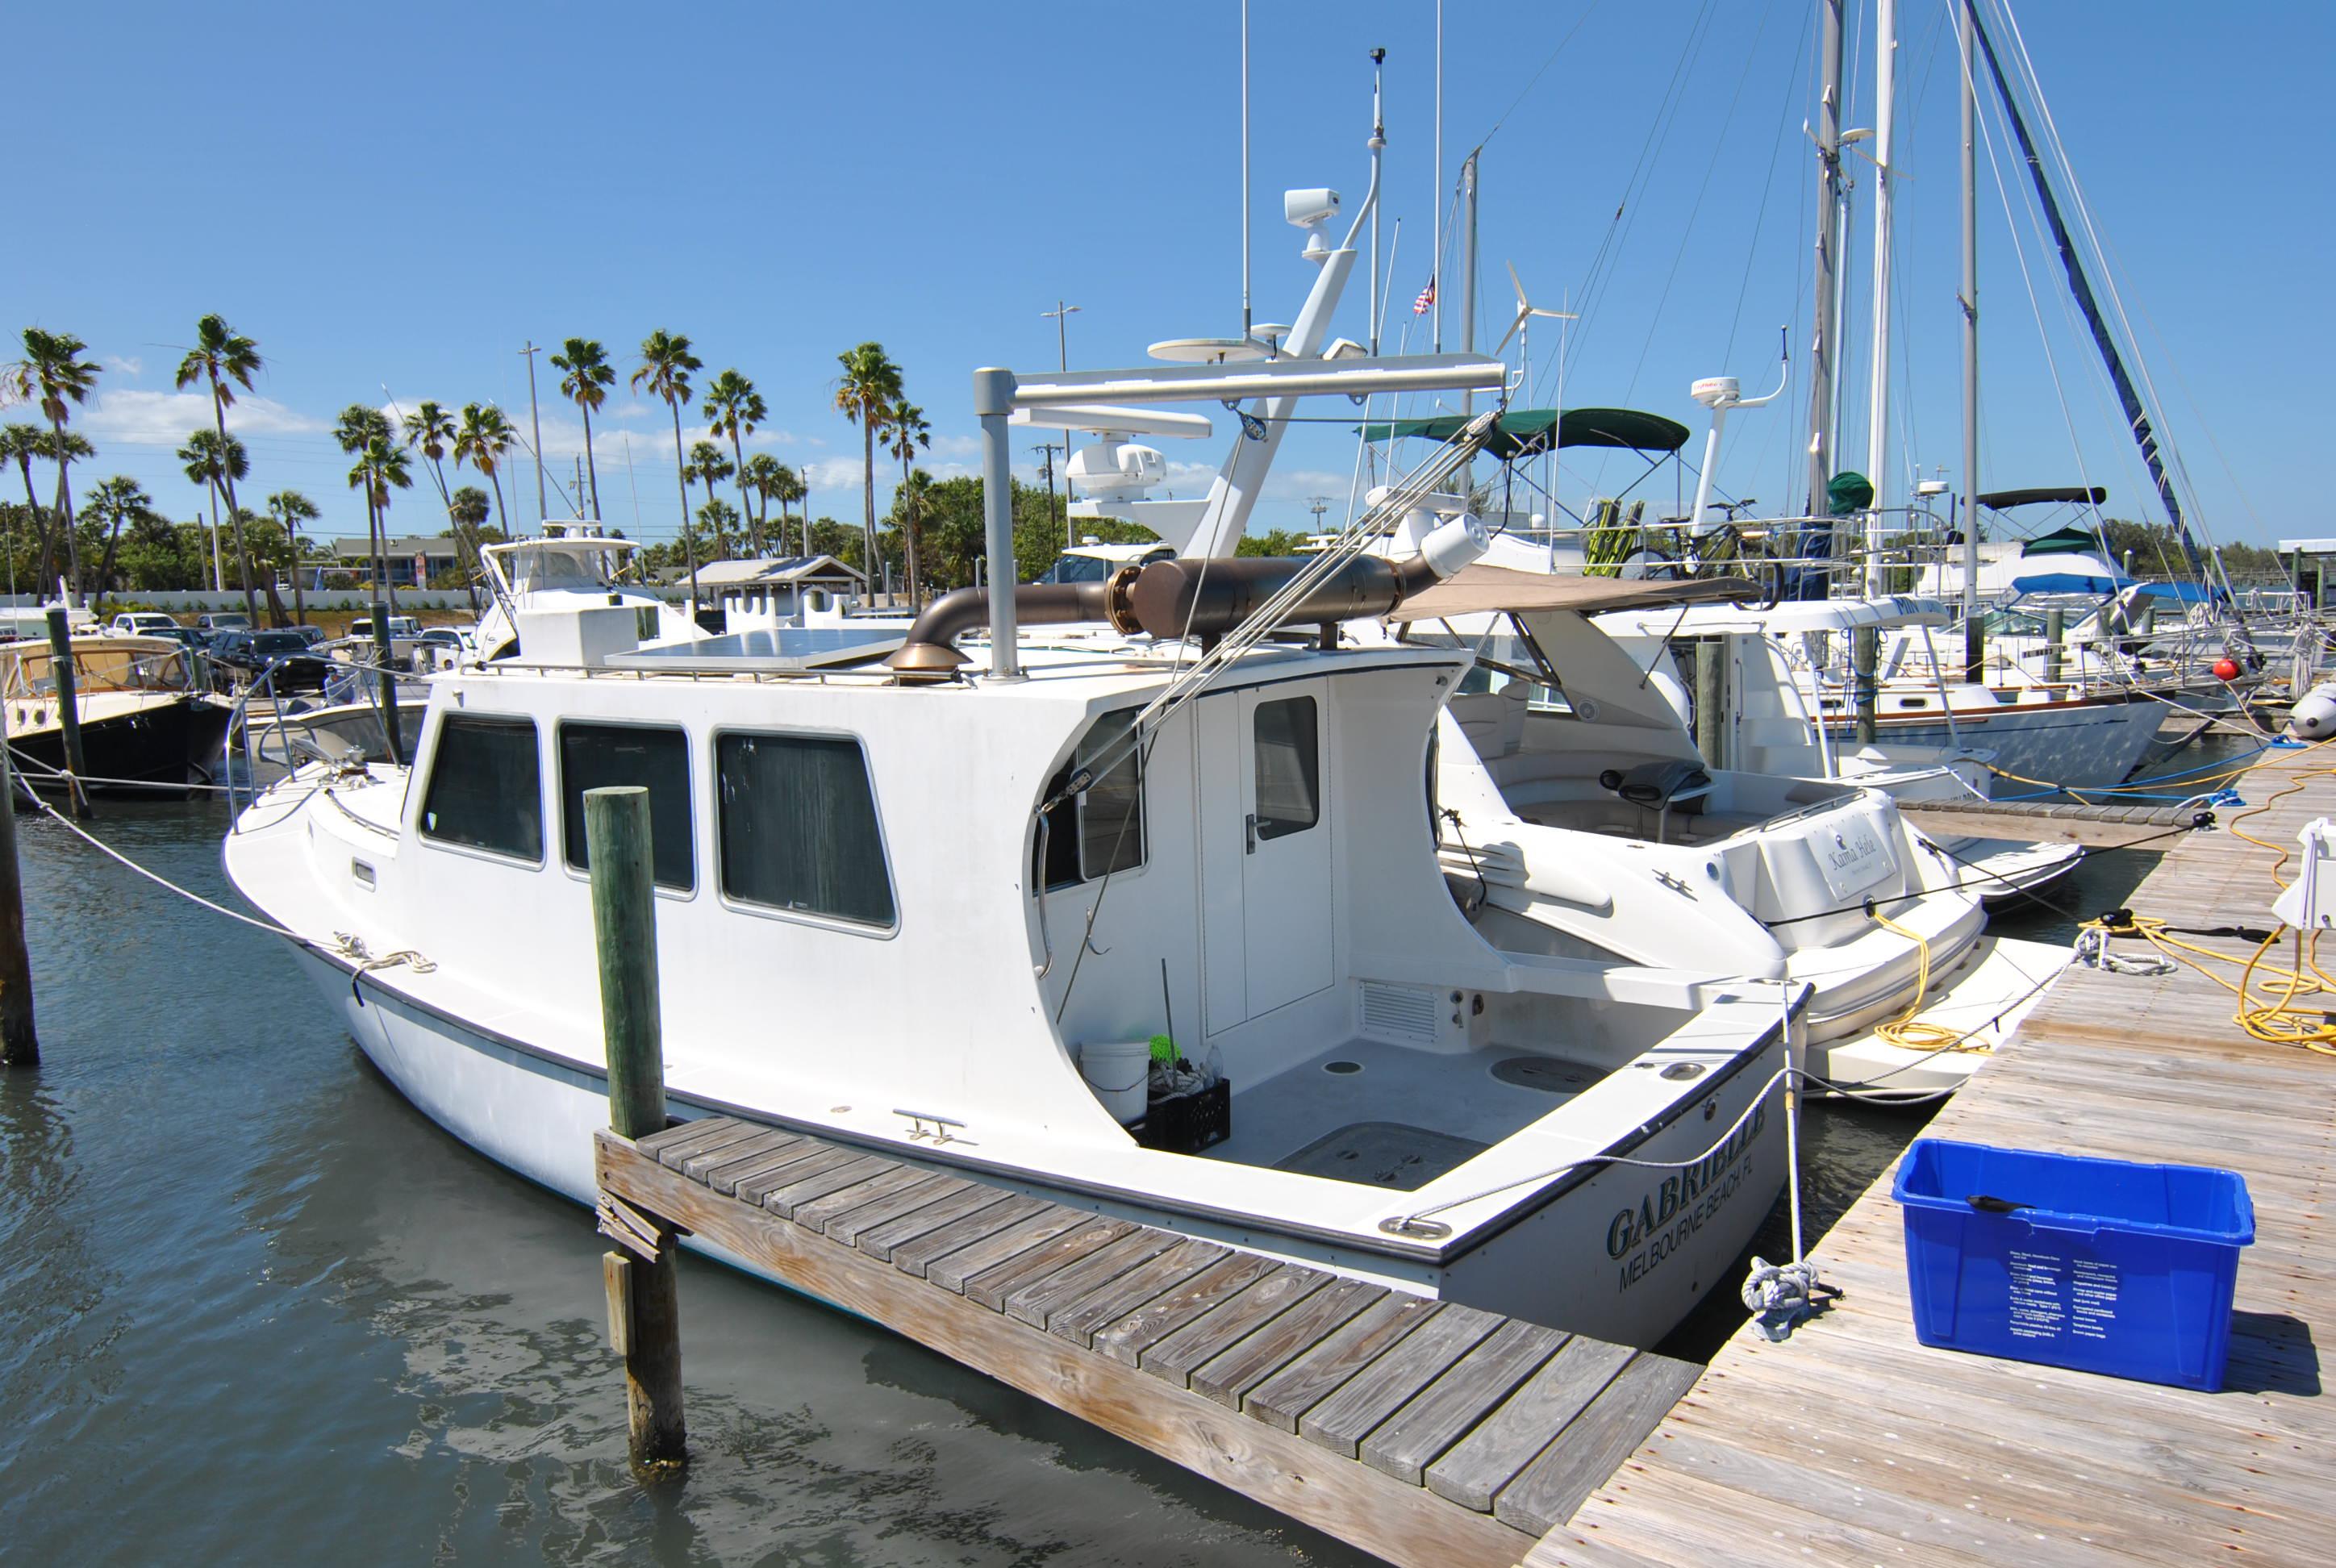 Lobster boats for sale in Florida - Boat Trader